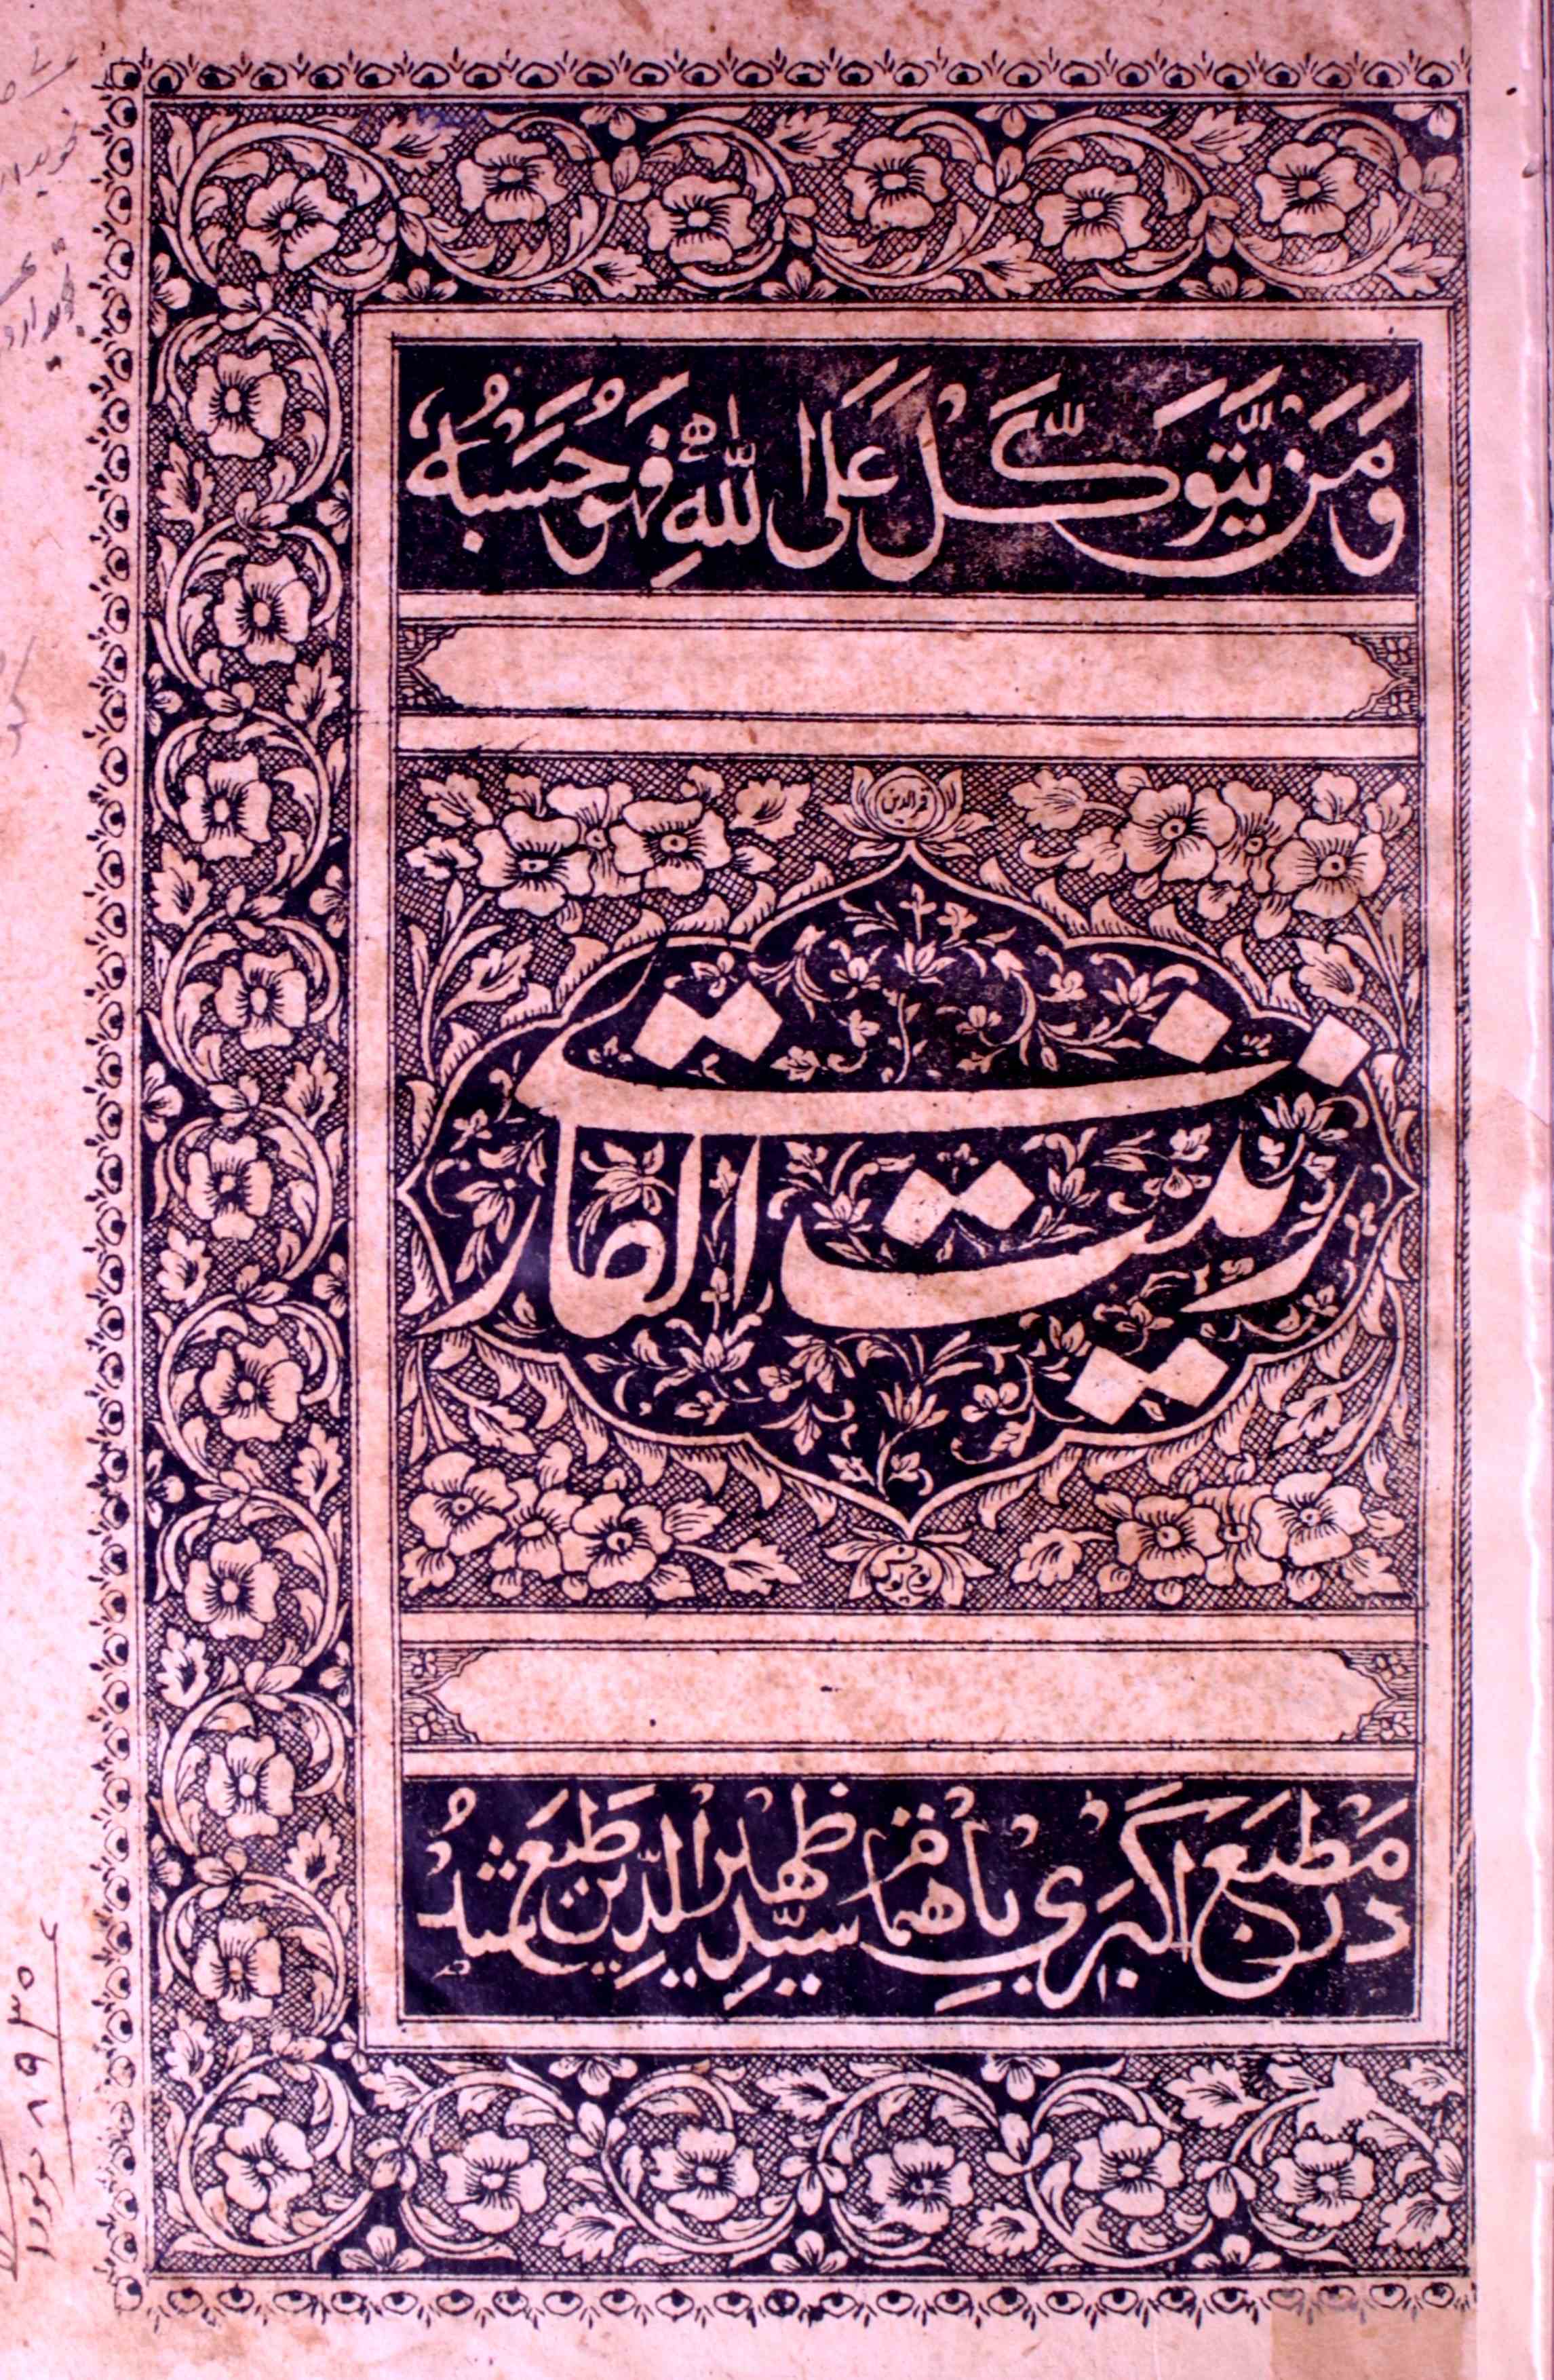 zeenat-ul-qari